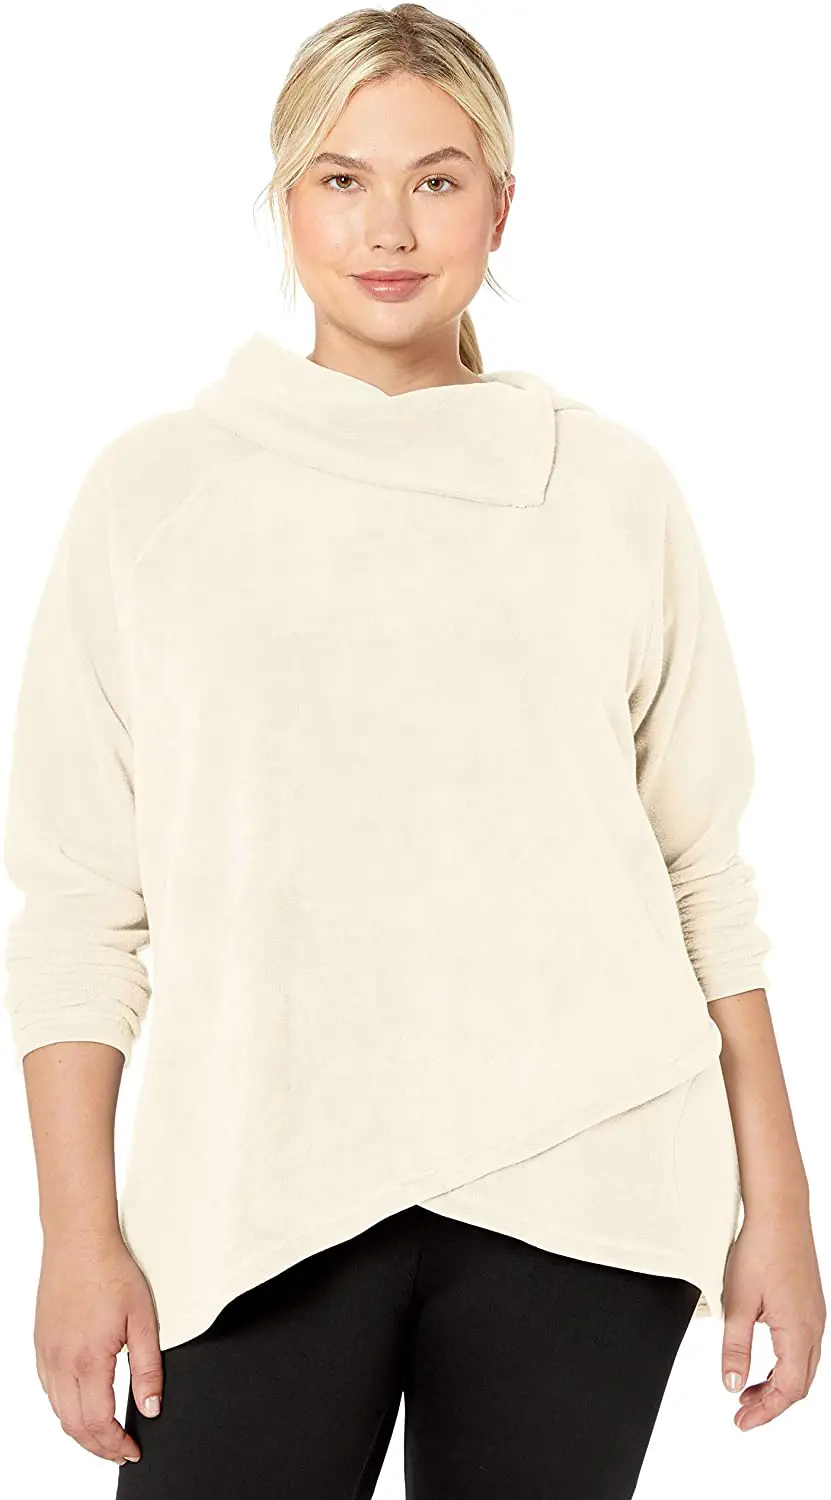 Plus Size Fleece Sweater 09